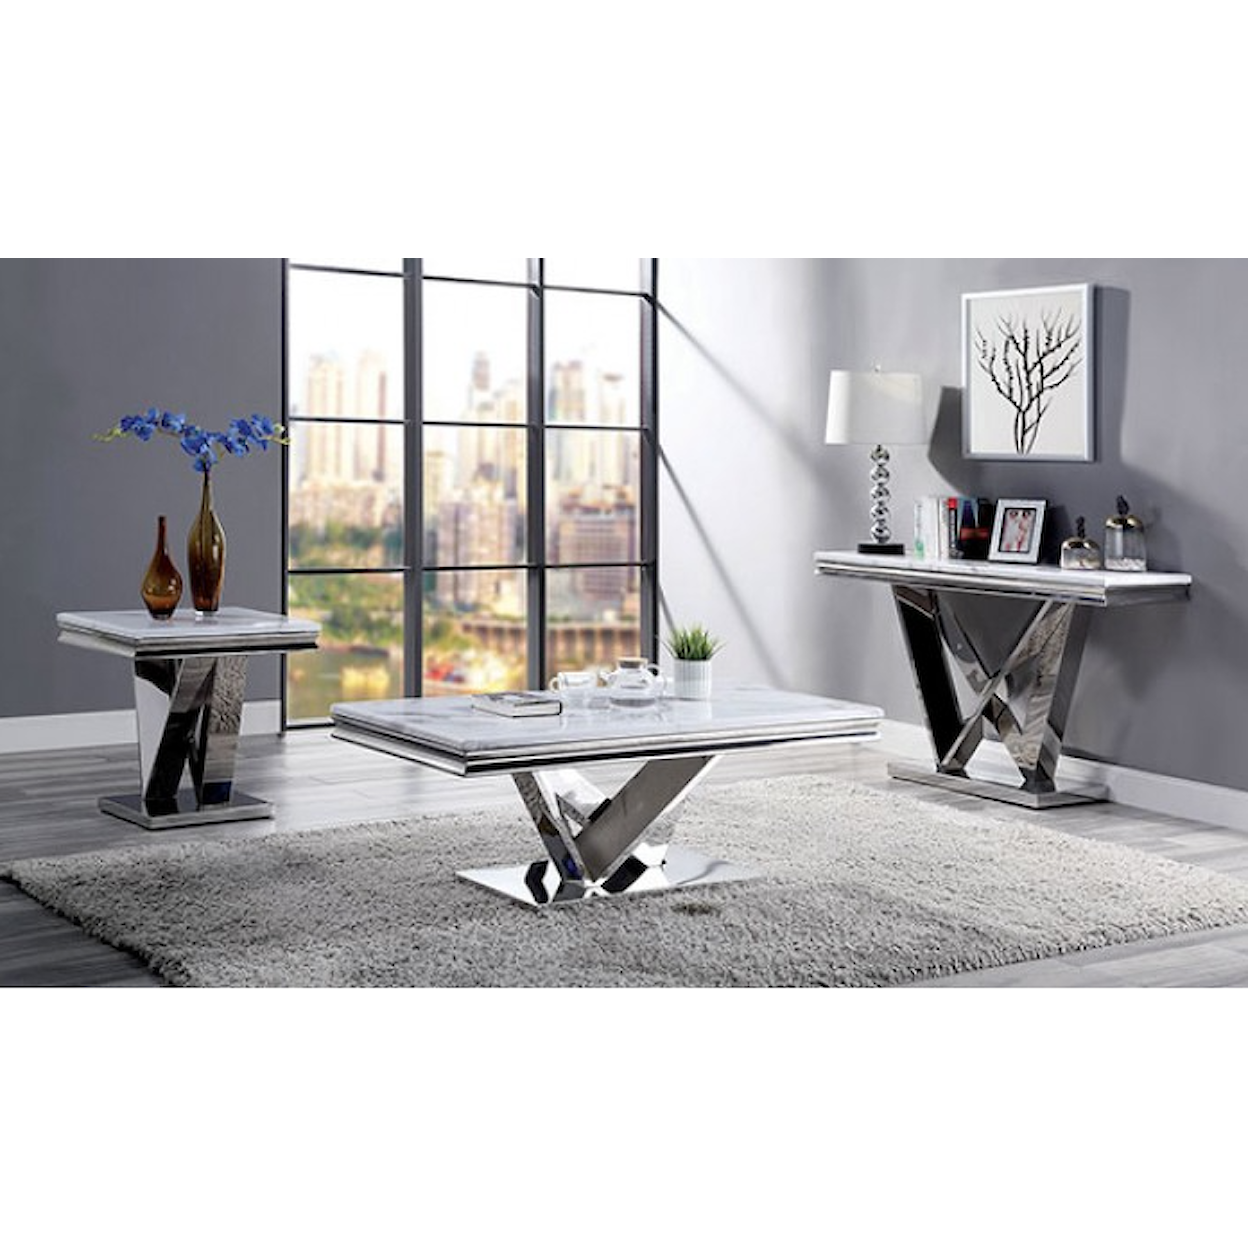 Furniture of America Villarsglane Coffee Table